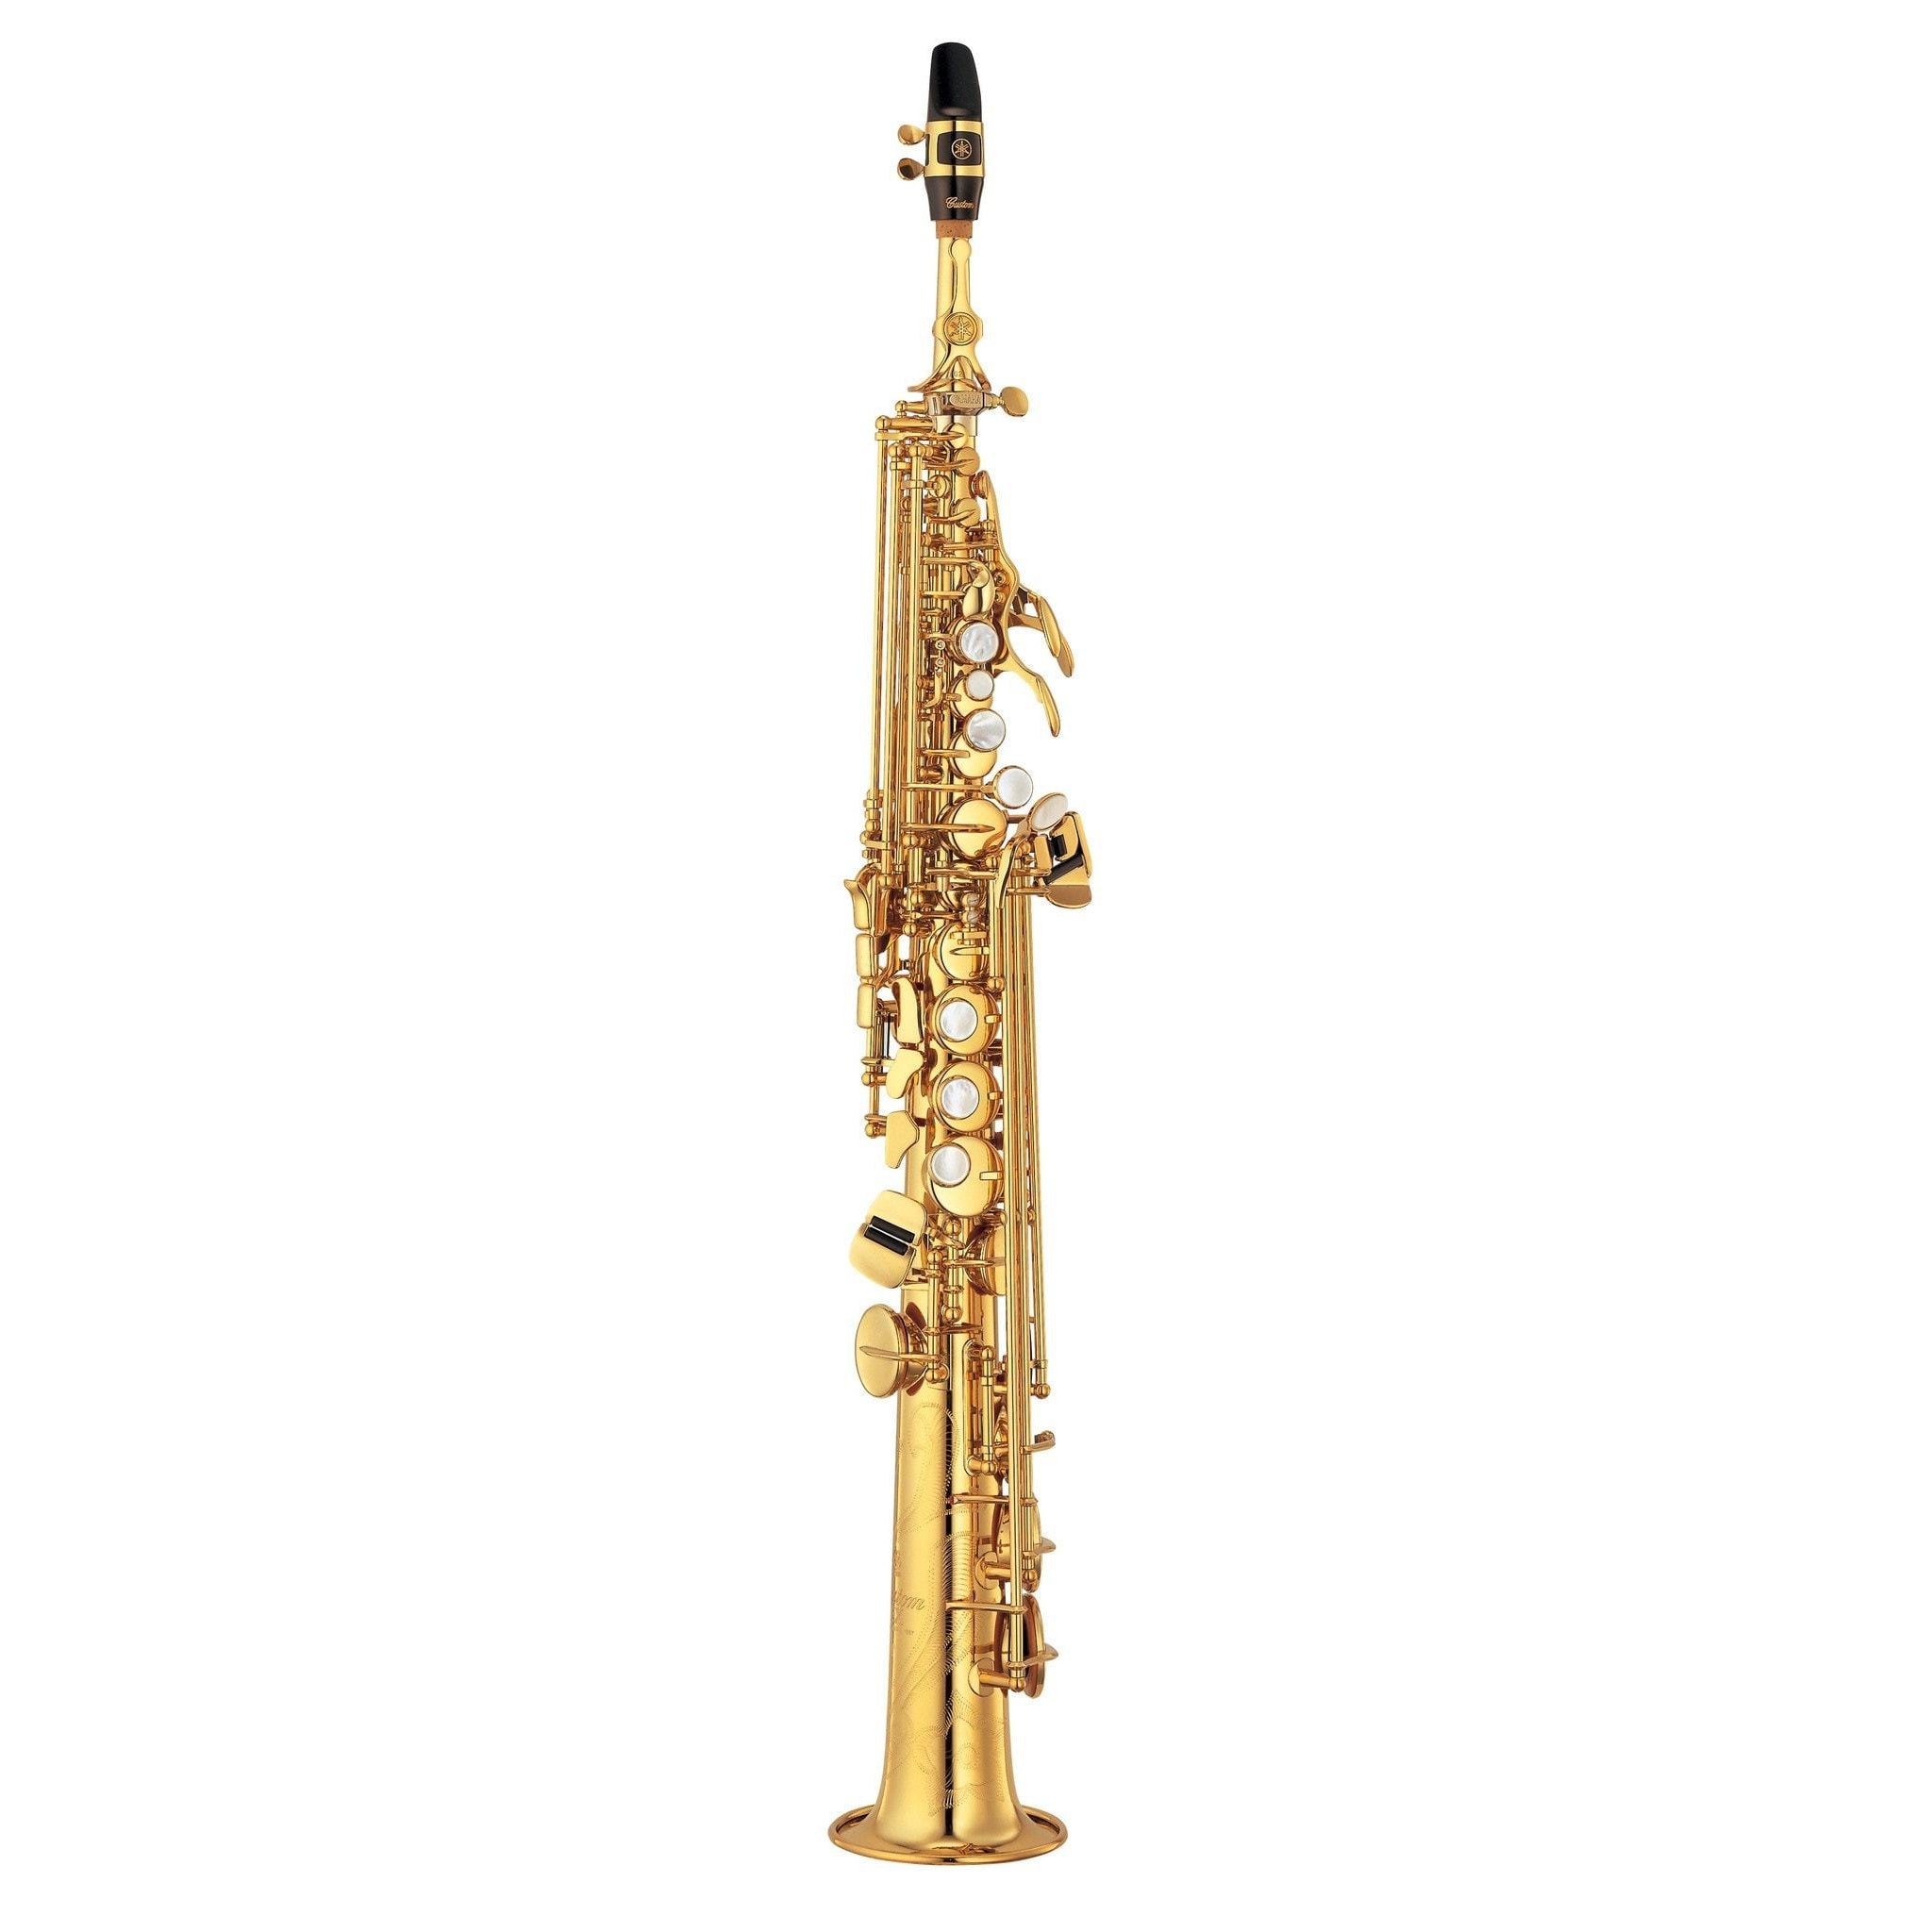 Yamaha YSS-875EXHG Soprano Saxophone YSS-875EXHG - Base Model